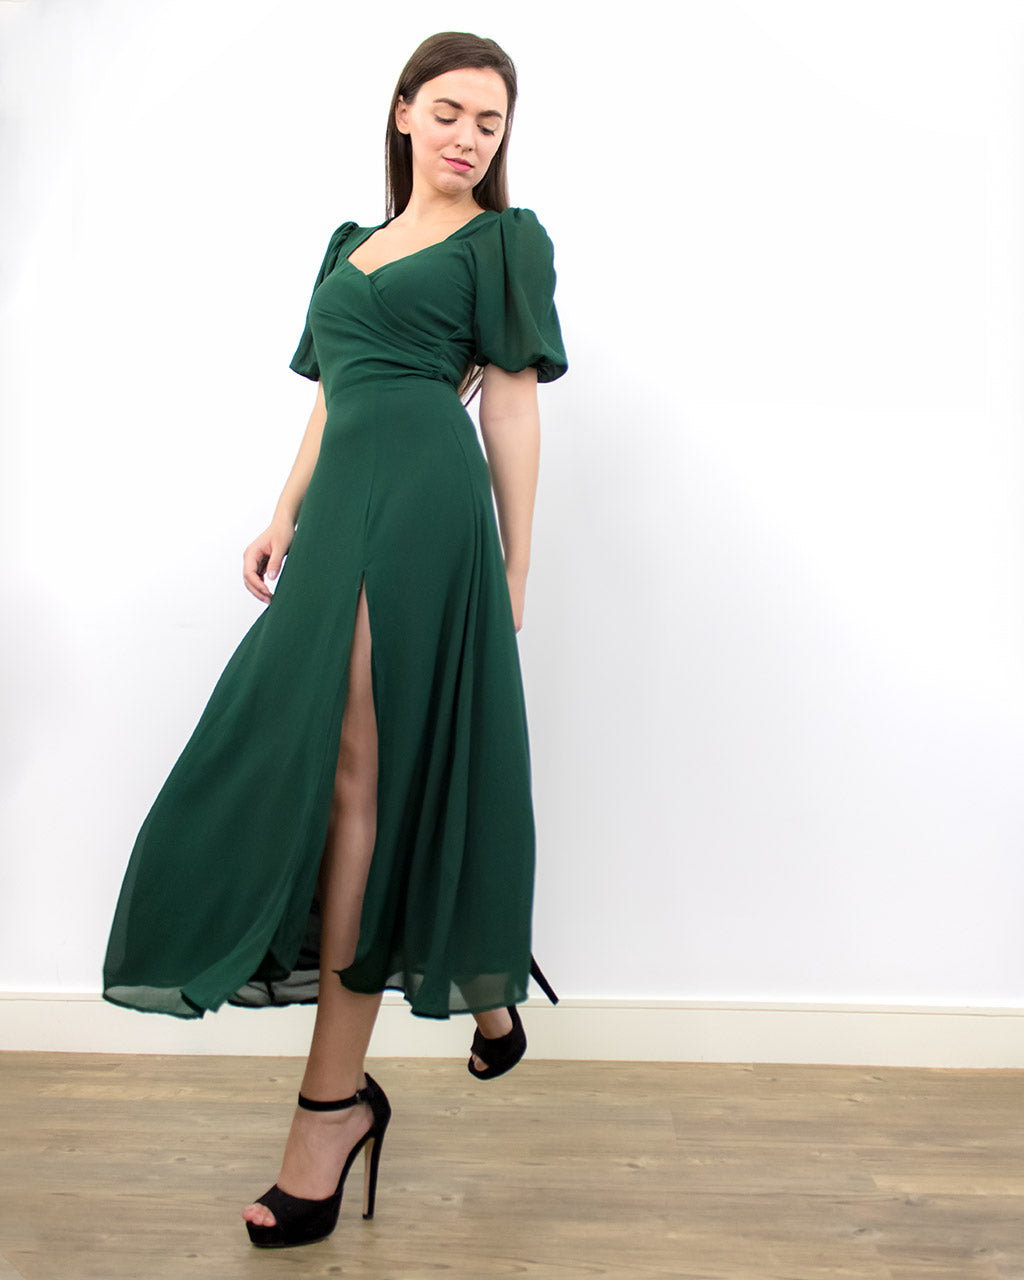 Green Dress with Sweetheart Neckline - Emerald Dress | ADKN UK